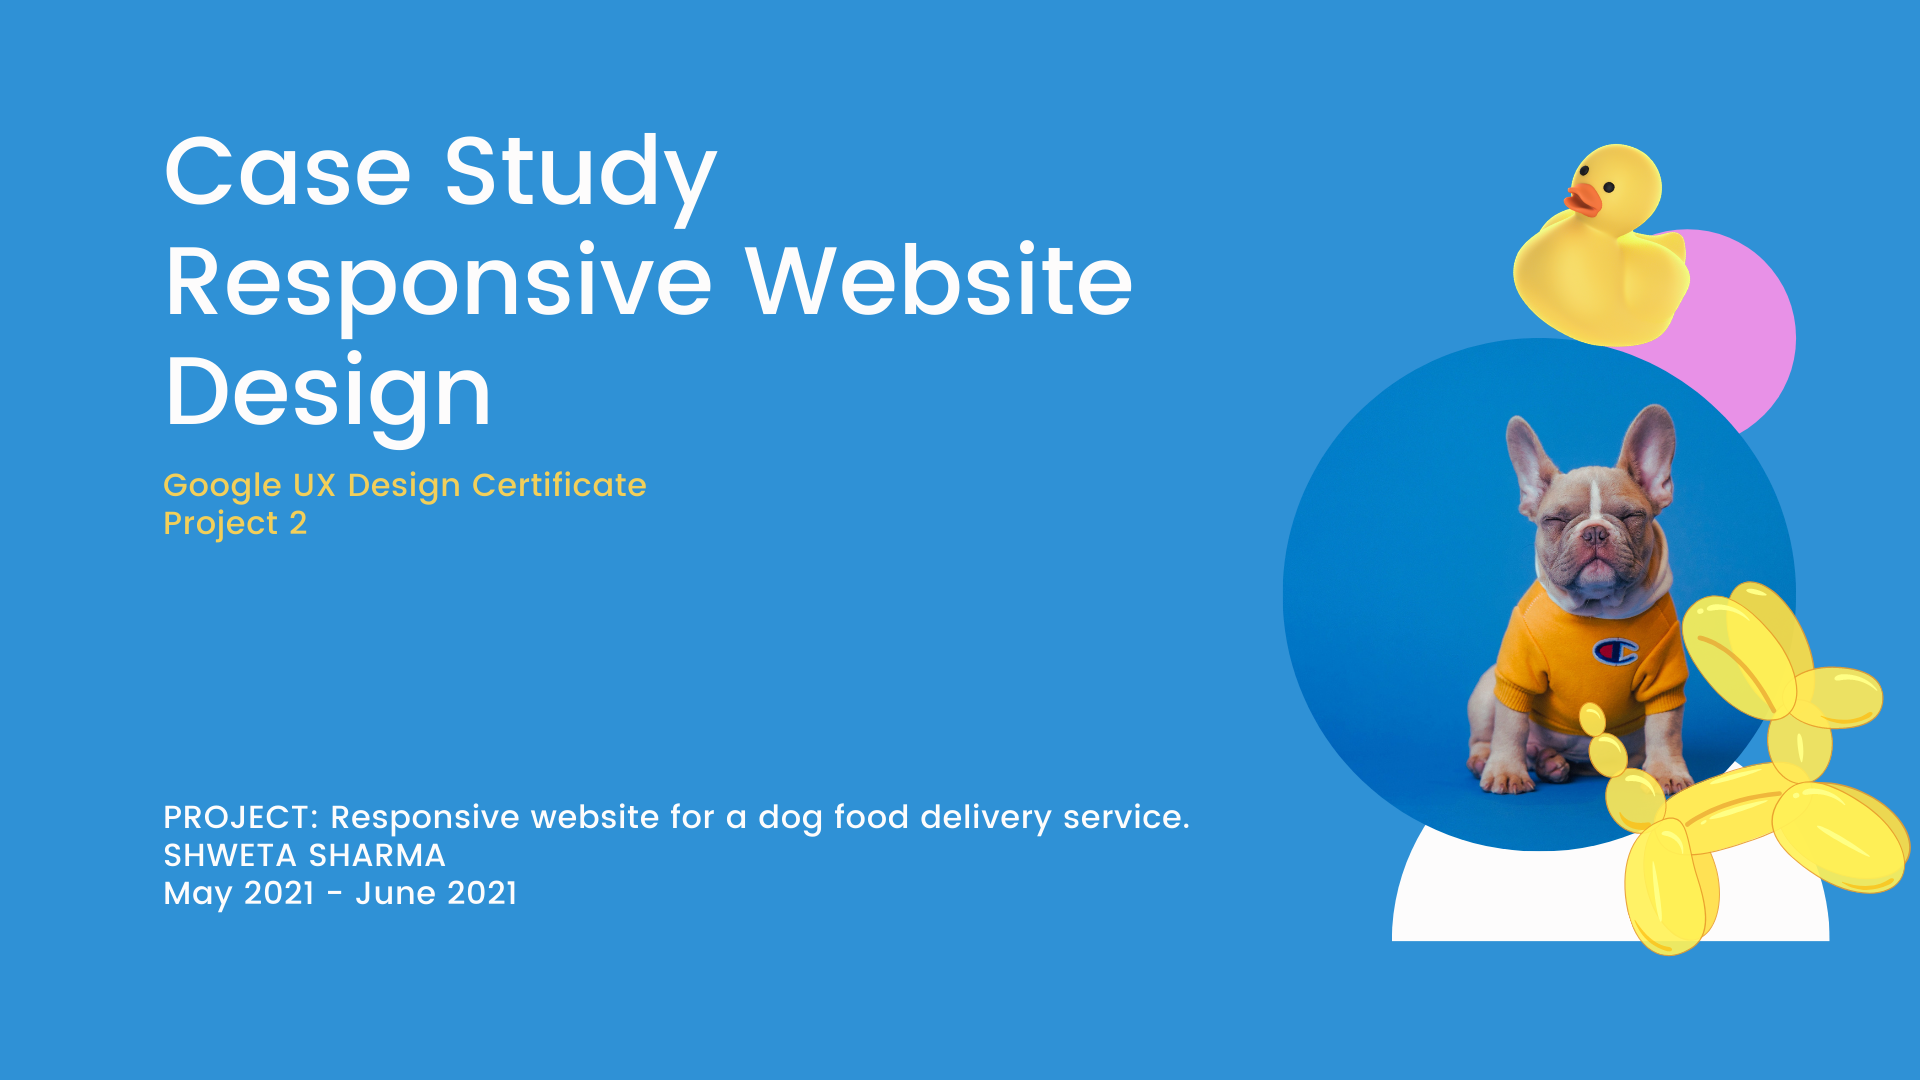 Dog food delivery website - Case study on Behance